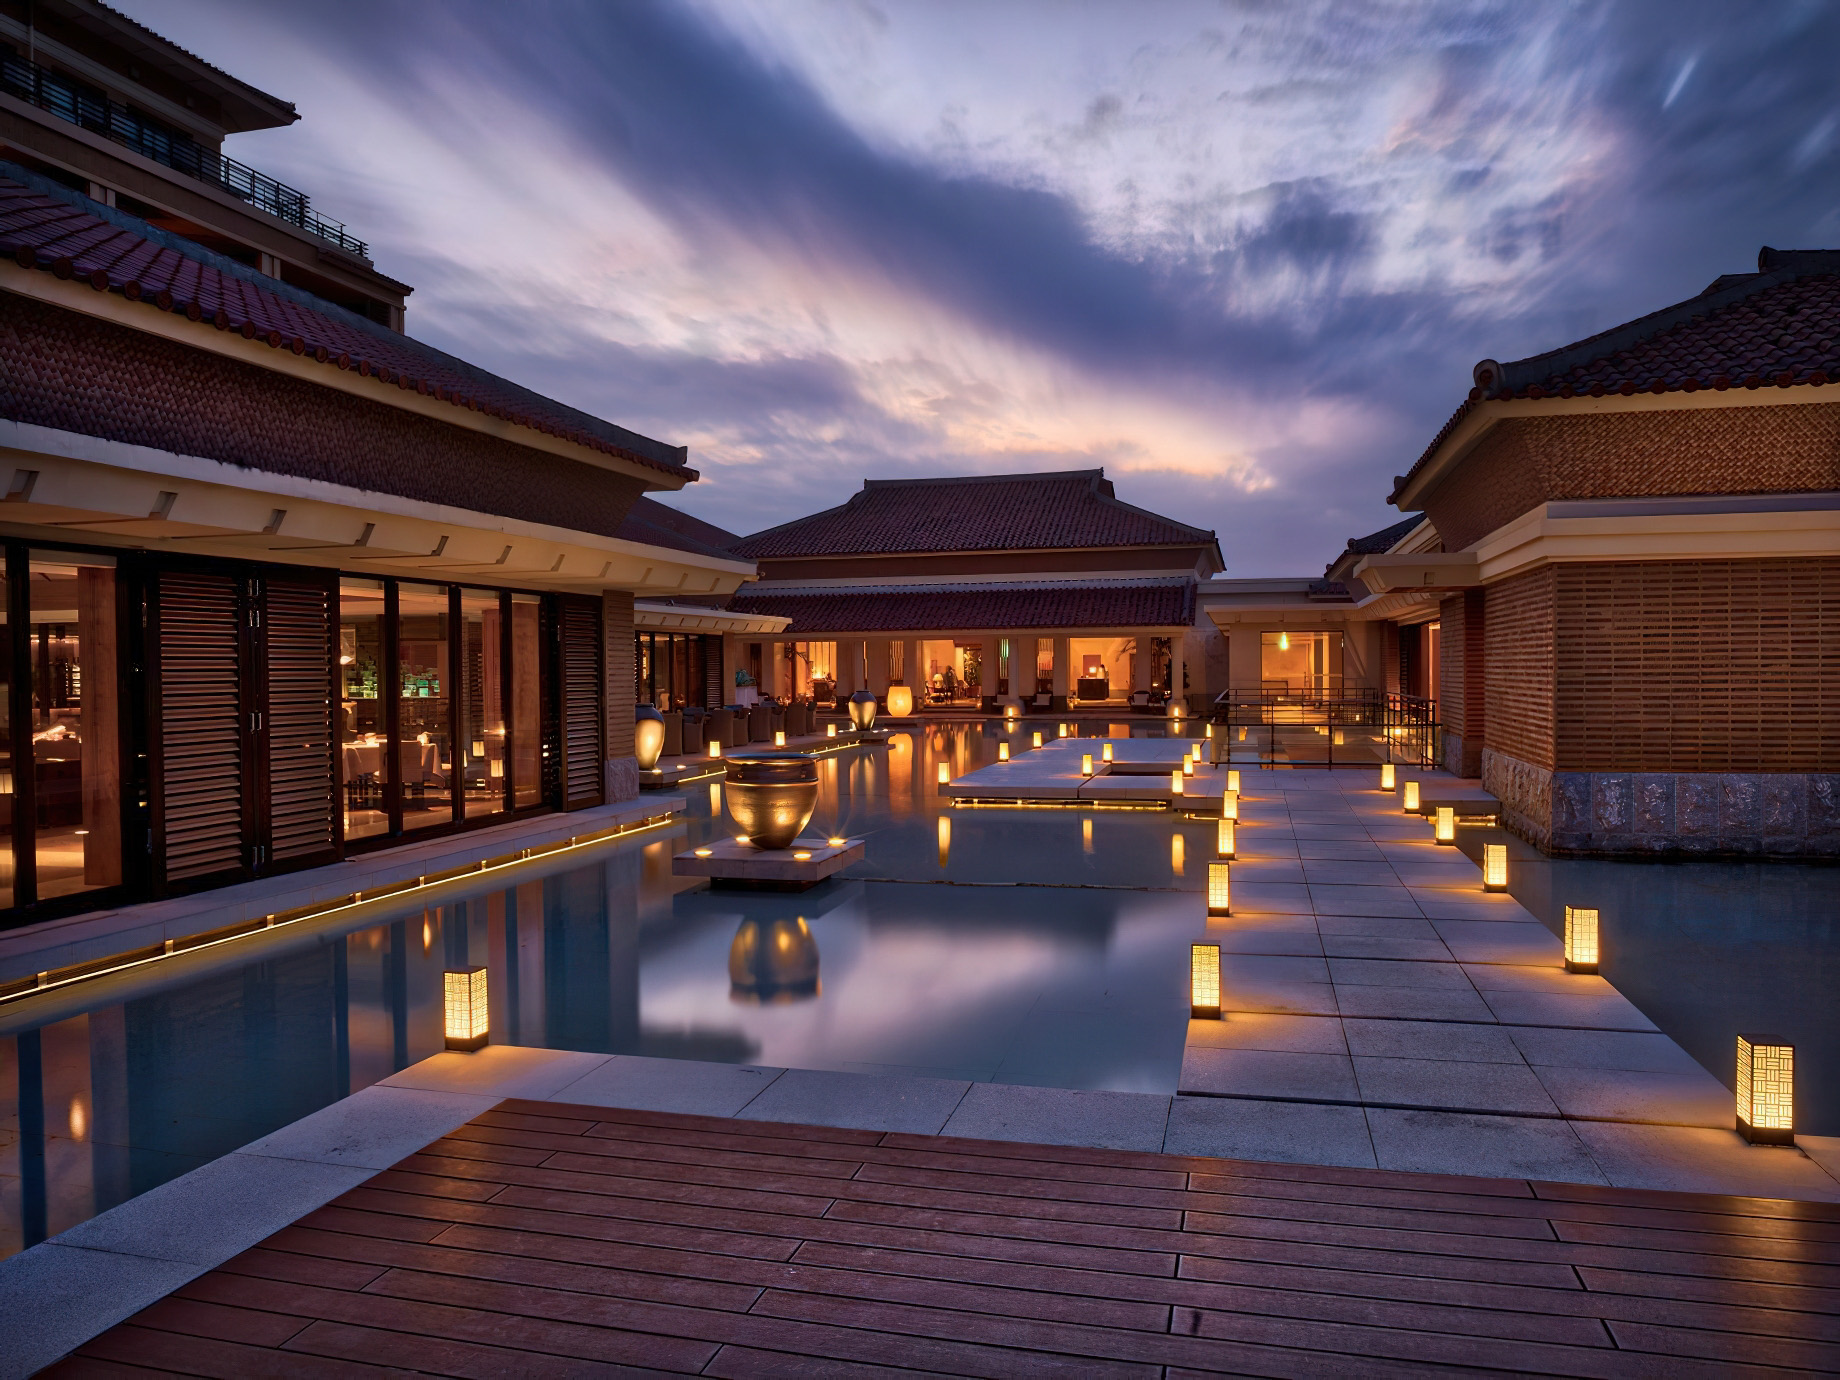 The Ritz-Carlton, Okinawa Hotel - Okinawa, Japan - Exterior Courtyard Sunset